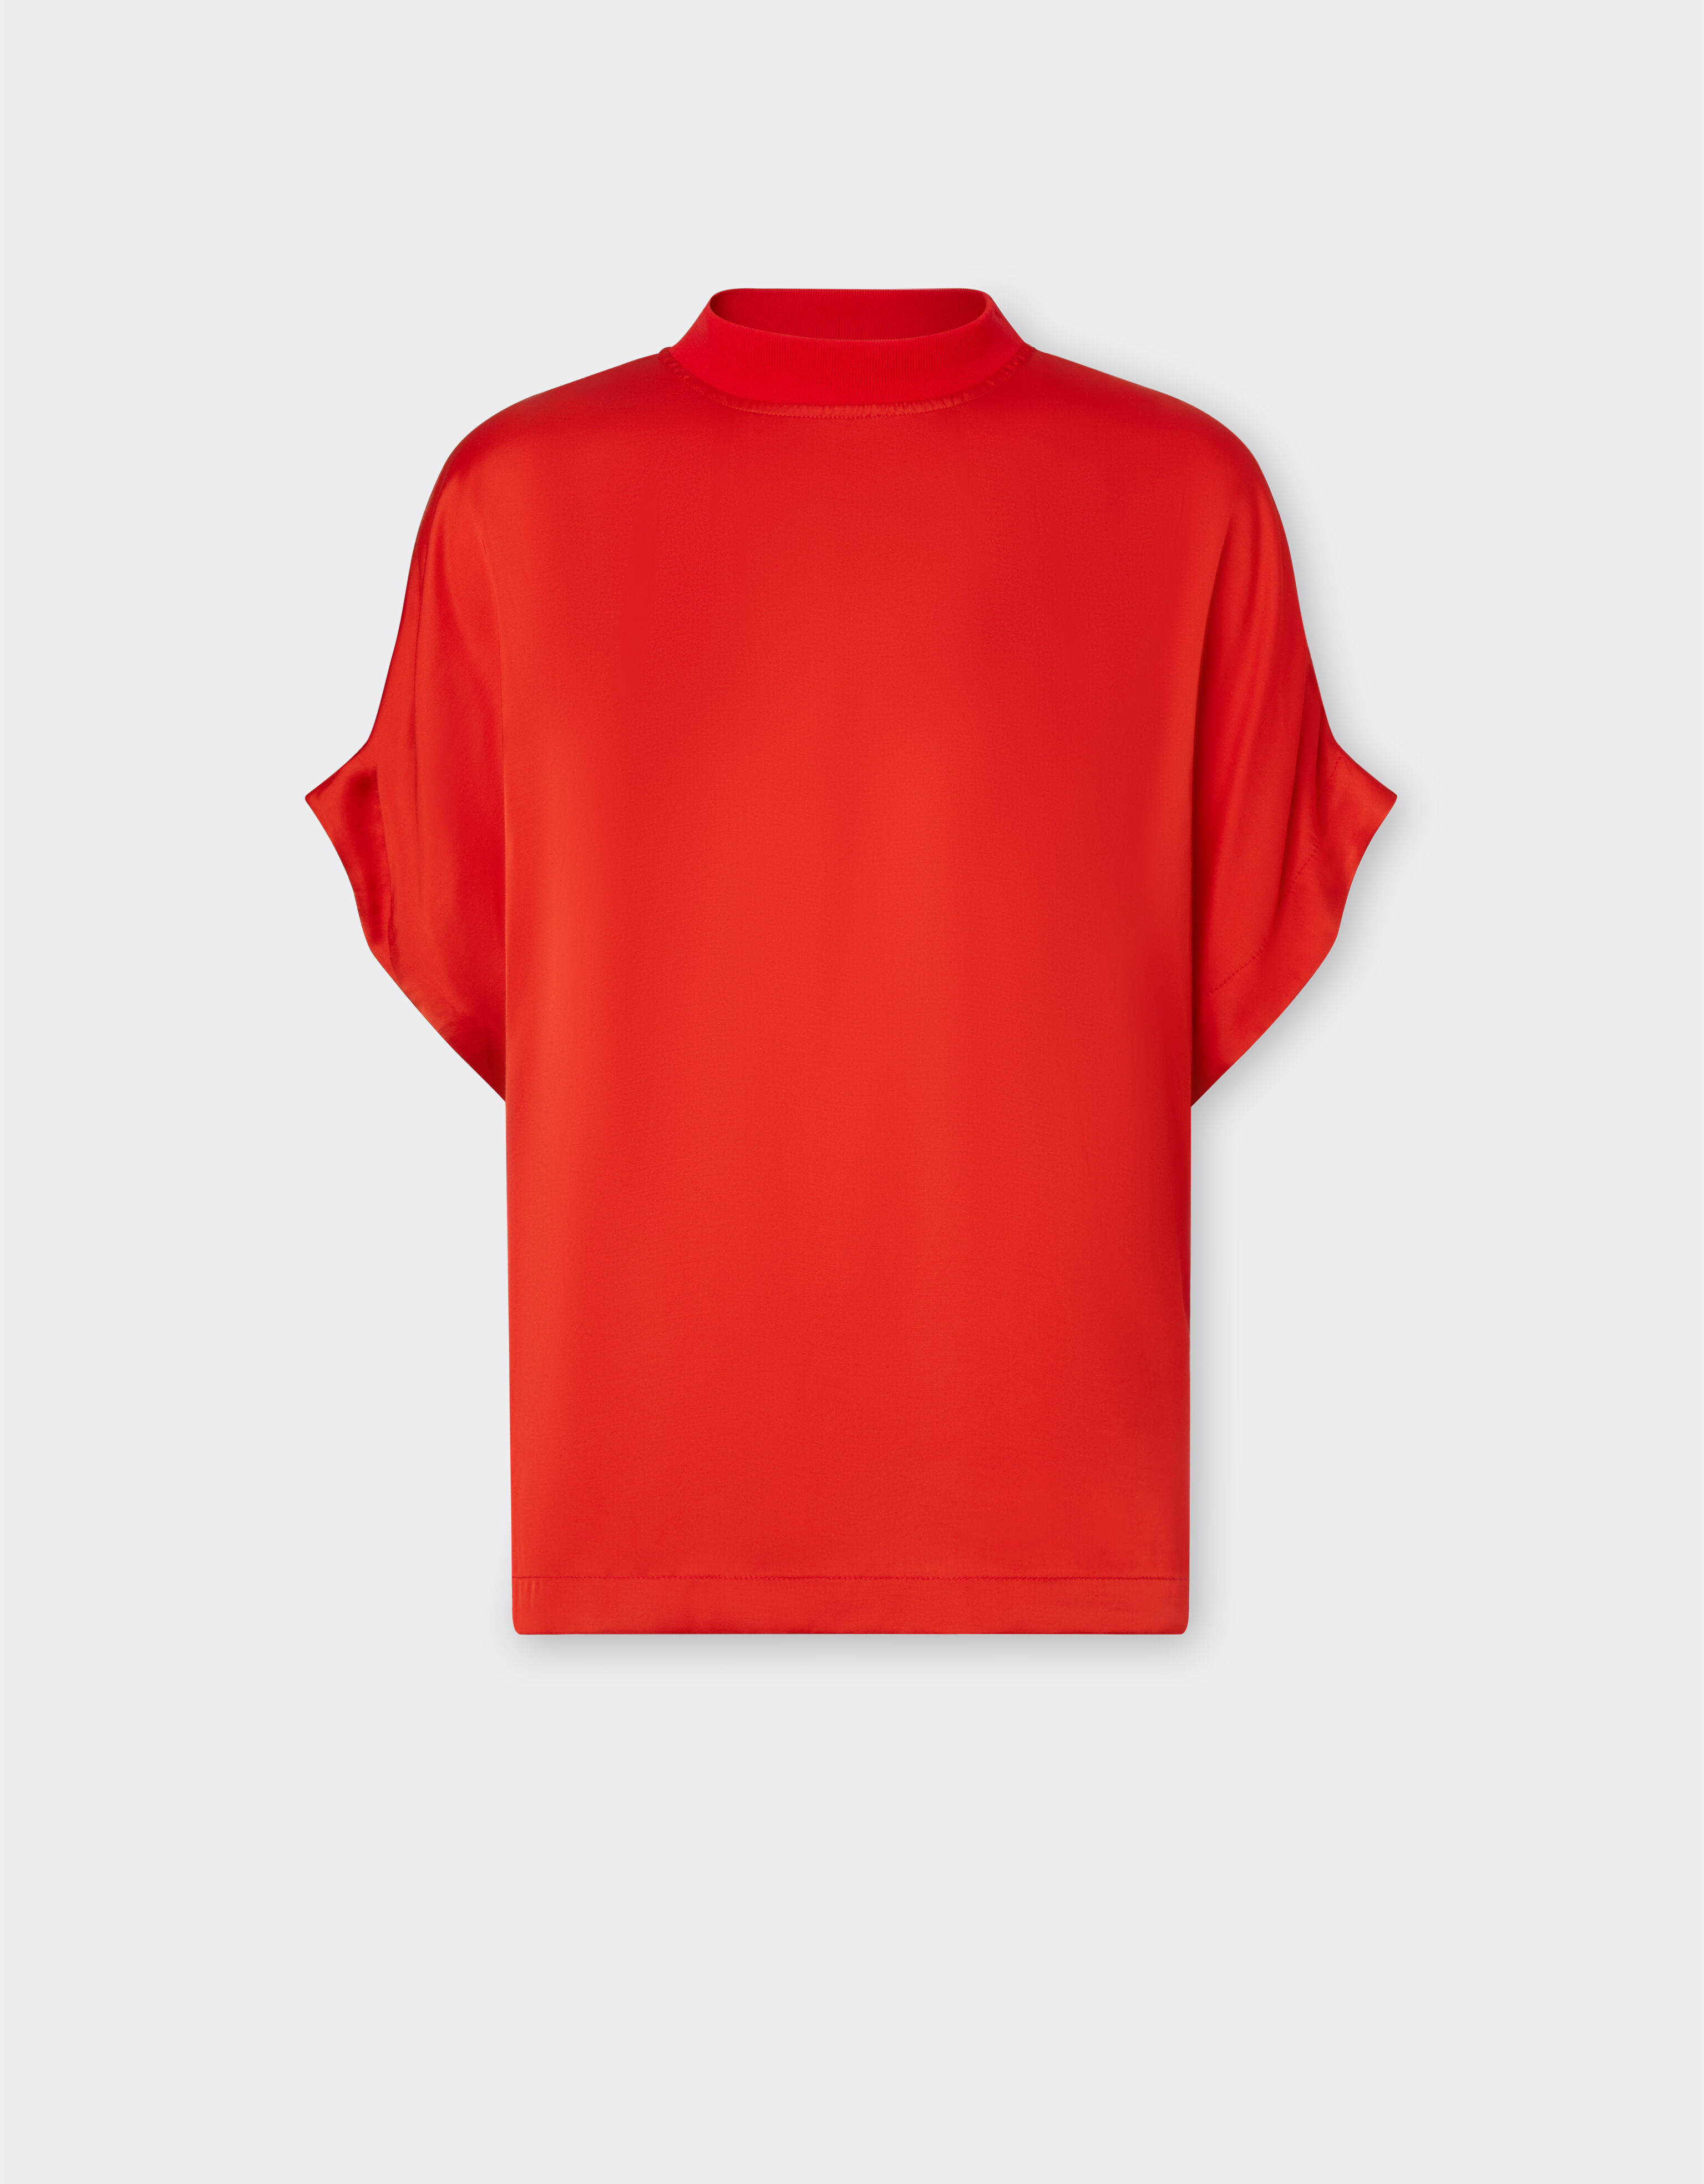 Ferrari Silk T-shirt with contrast high collar Optical White 20692f